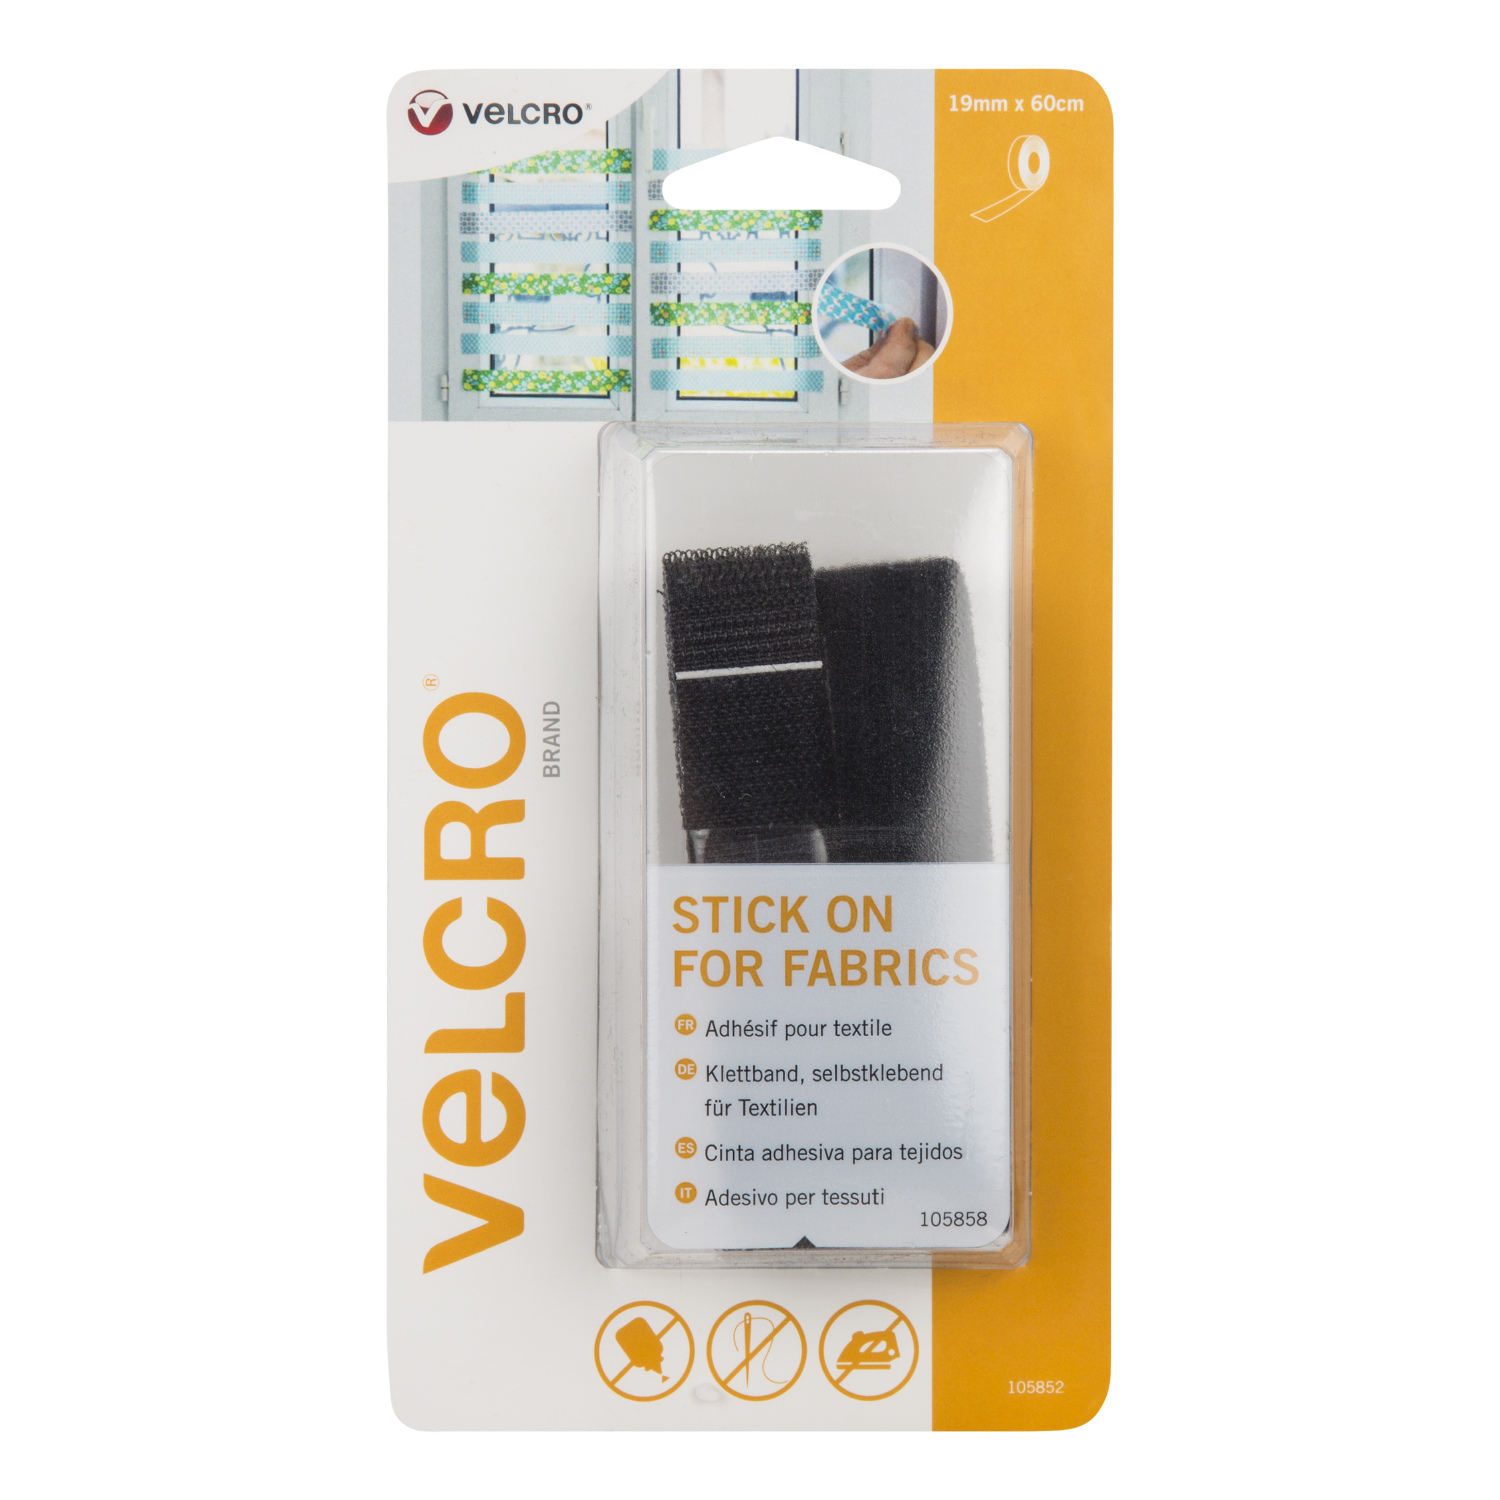 VELCRO Brand Stick On Tape For Fabrics  - Black Image